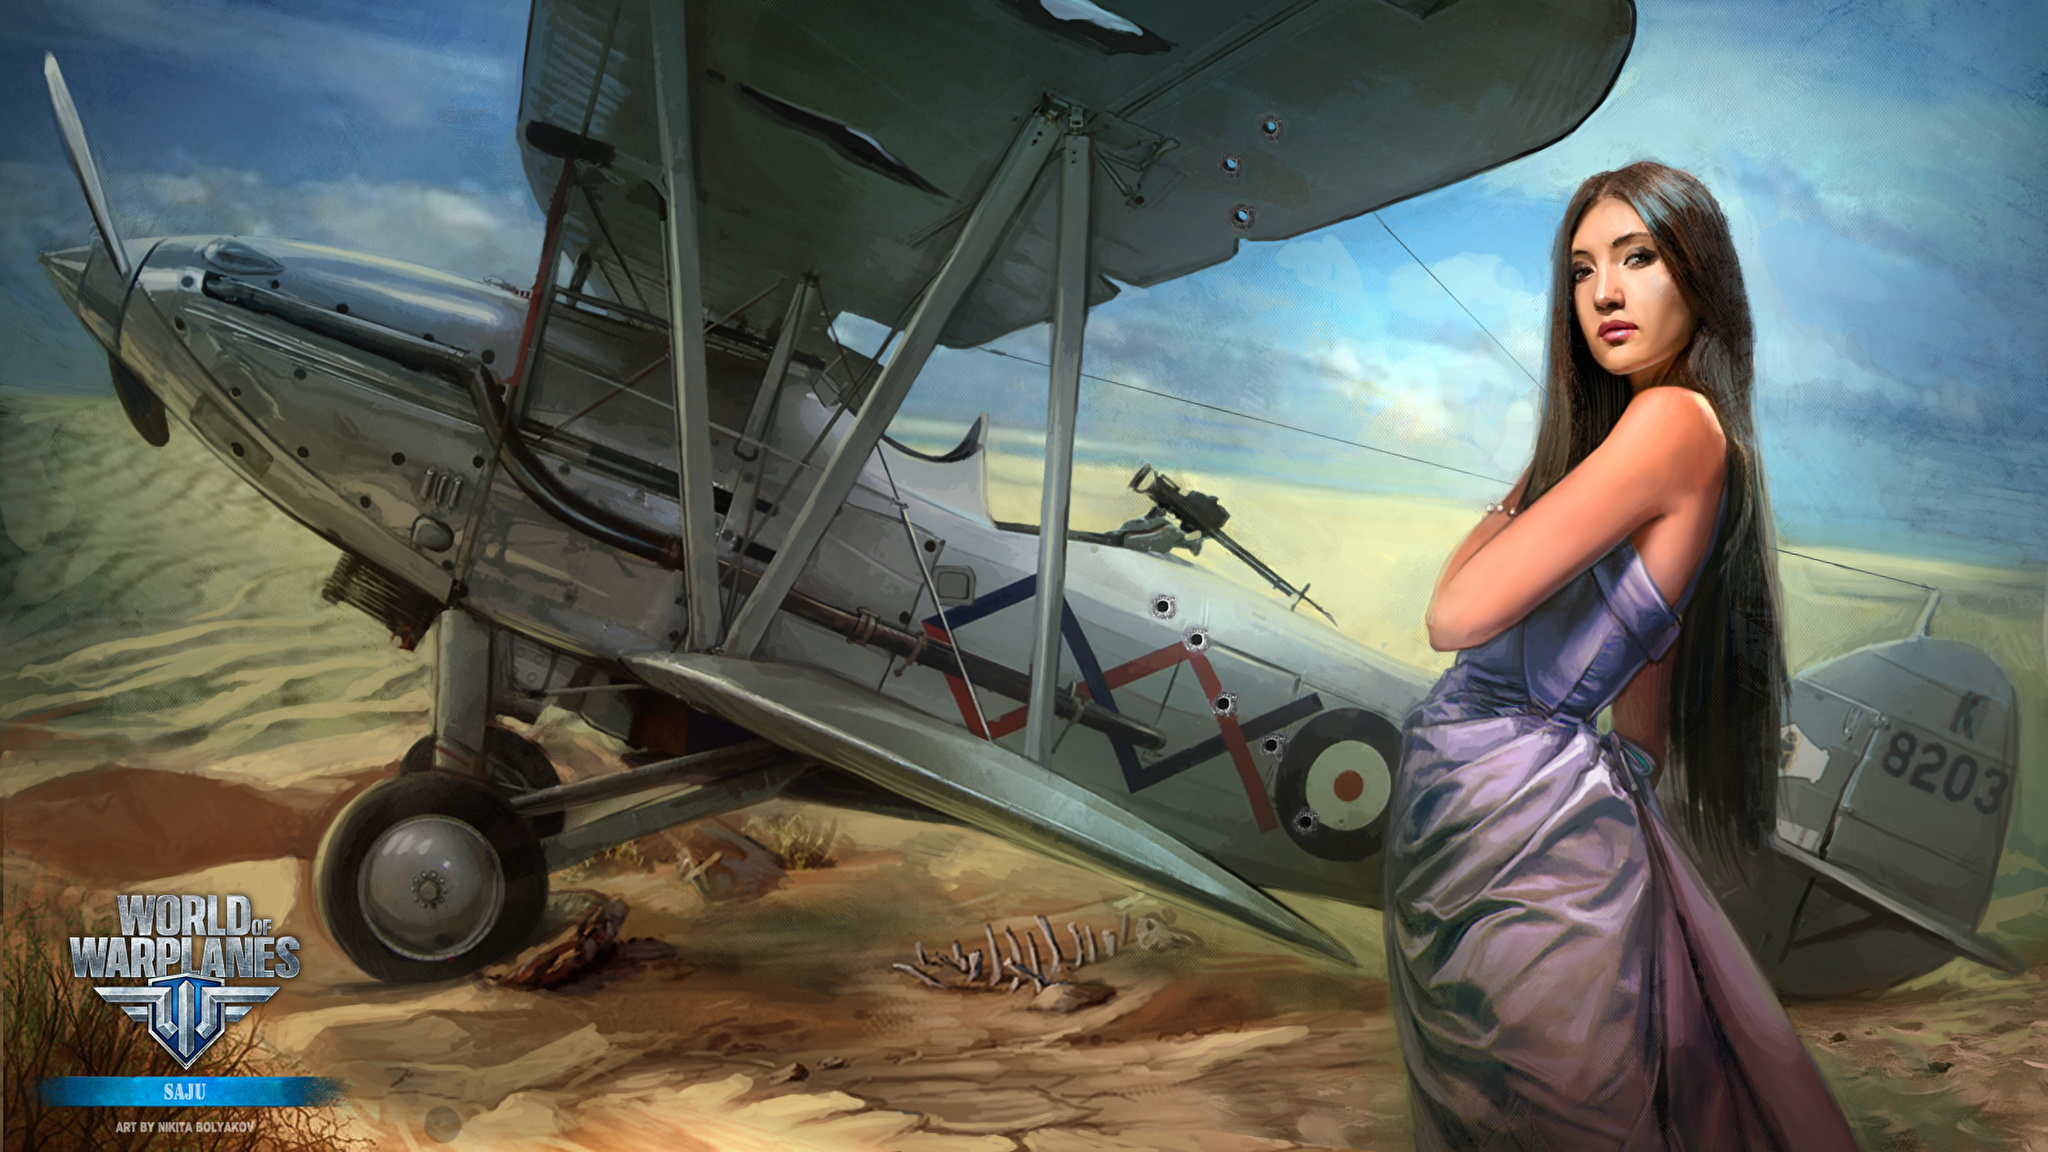 Игровой сайт пин ап fan. World of warplanes самолеты. World of warplanes самолеты девушка. Мир самолетов World of warplanes. Nikita Bolyakov.